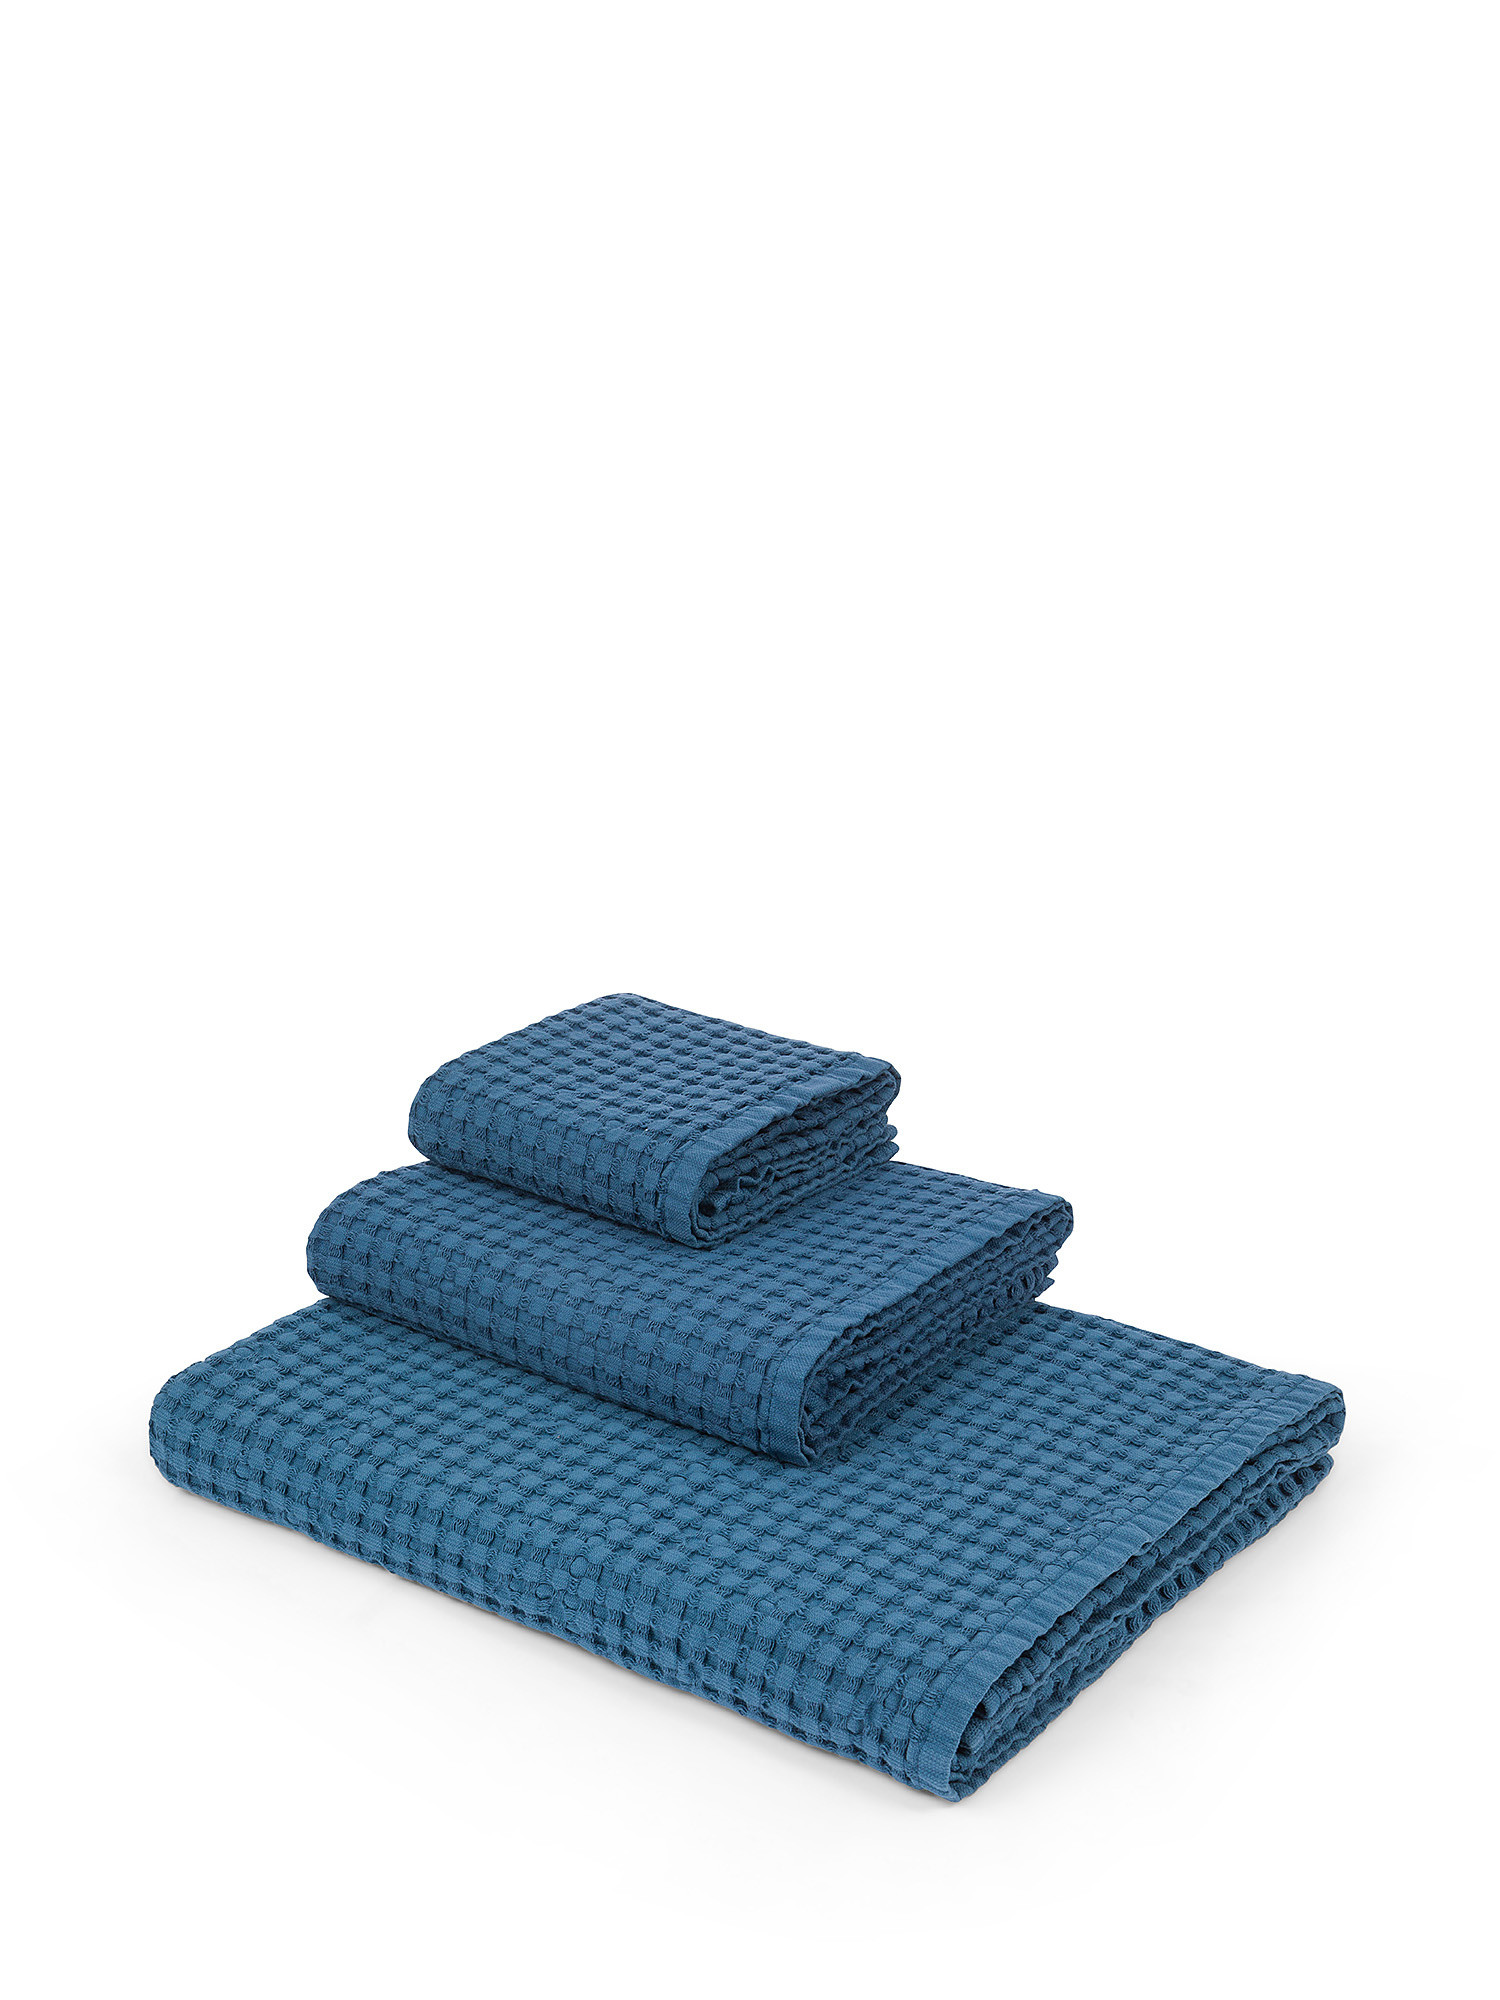 Honeycomb cotton towel, Dark Blue, large image number 0